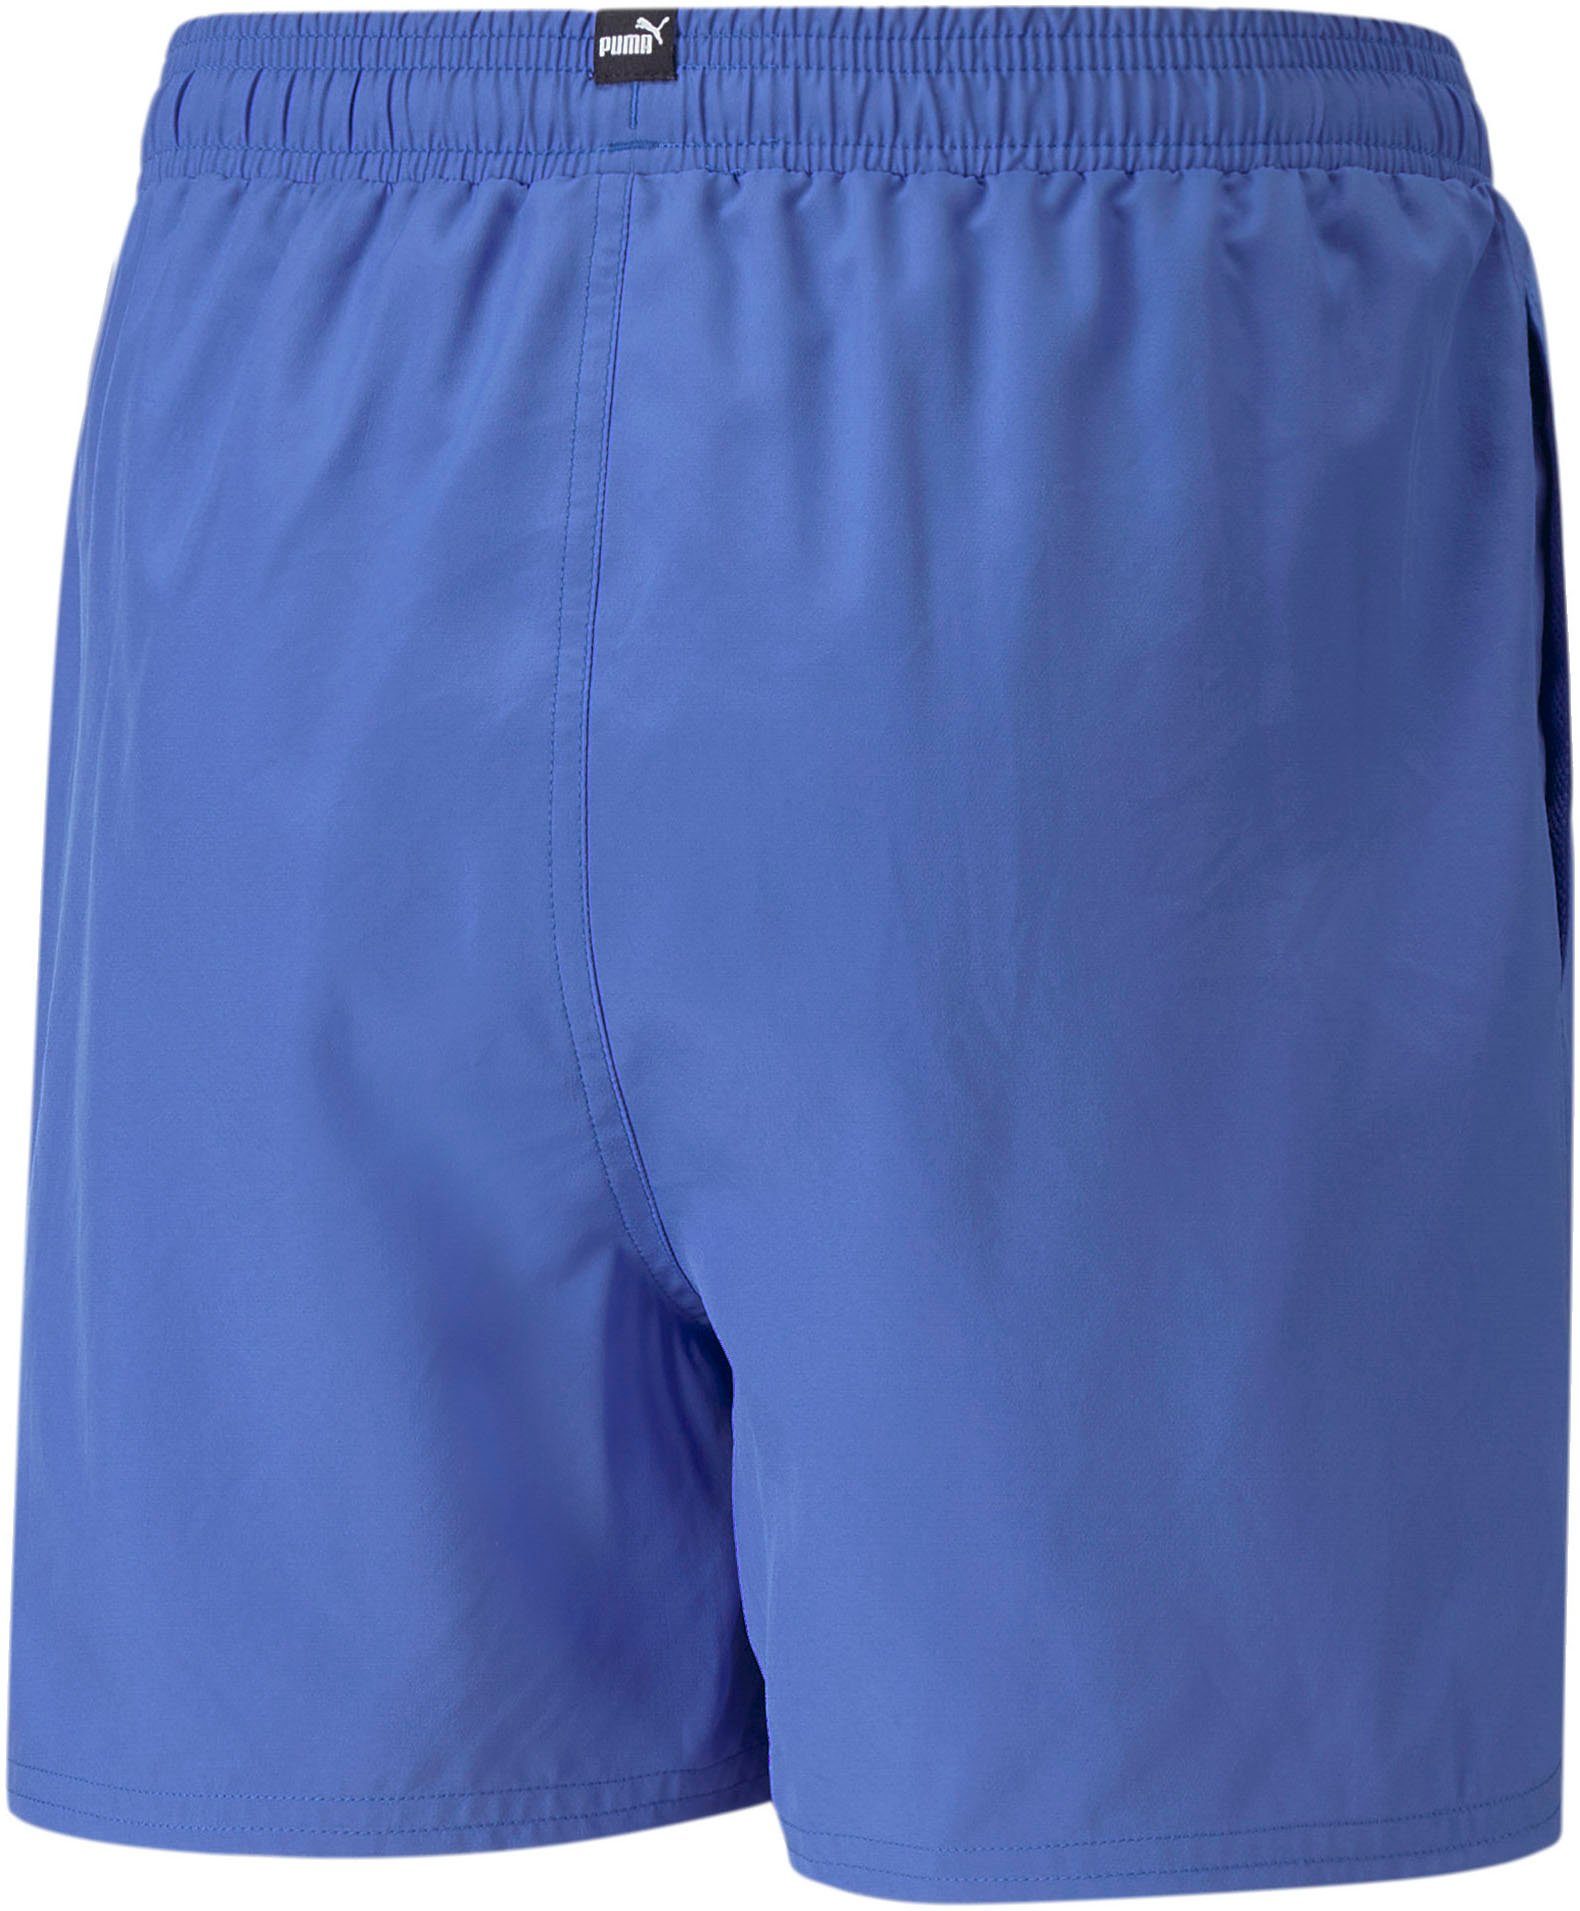 B ESS+ PUMA Shorts Shorts blau Woven LOGOLAB